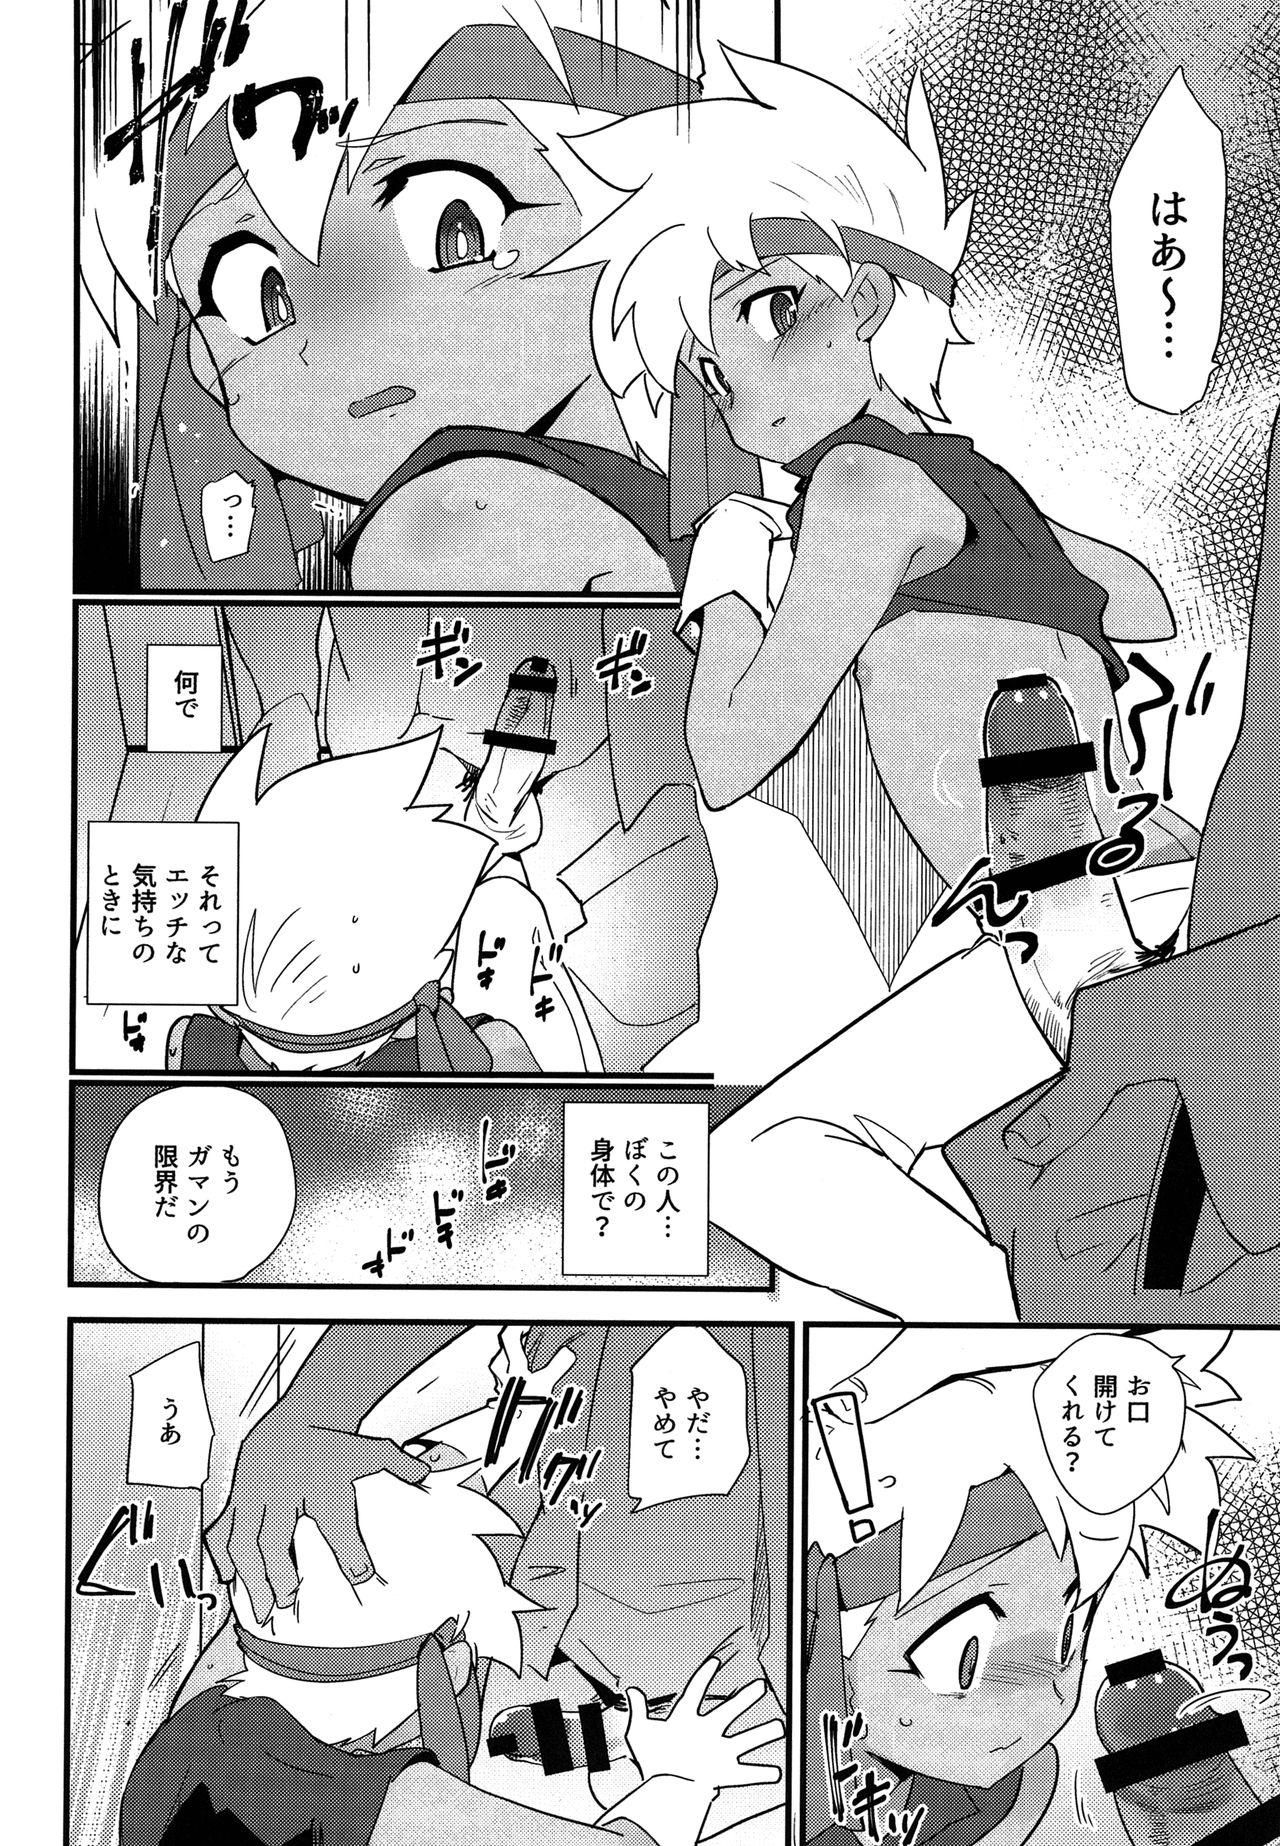 Virginity Nishitsu nite. - Bakusou kyoudai lets and go Fitness - Page 7